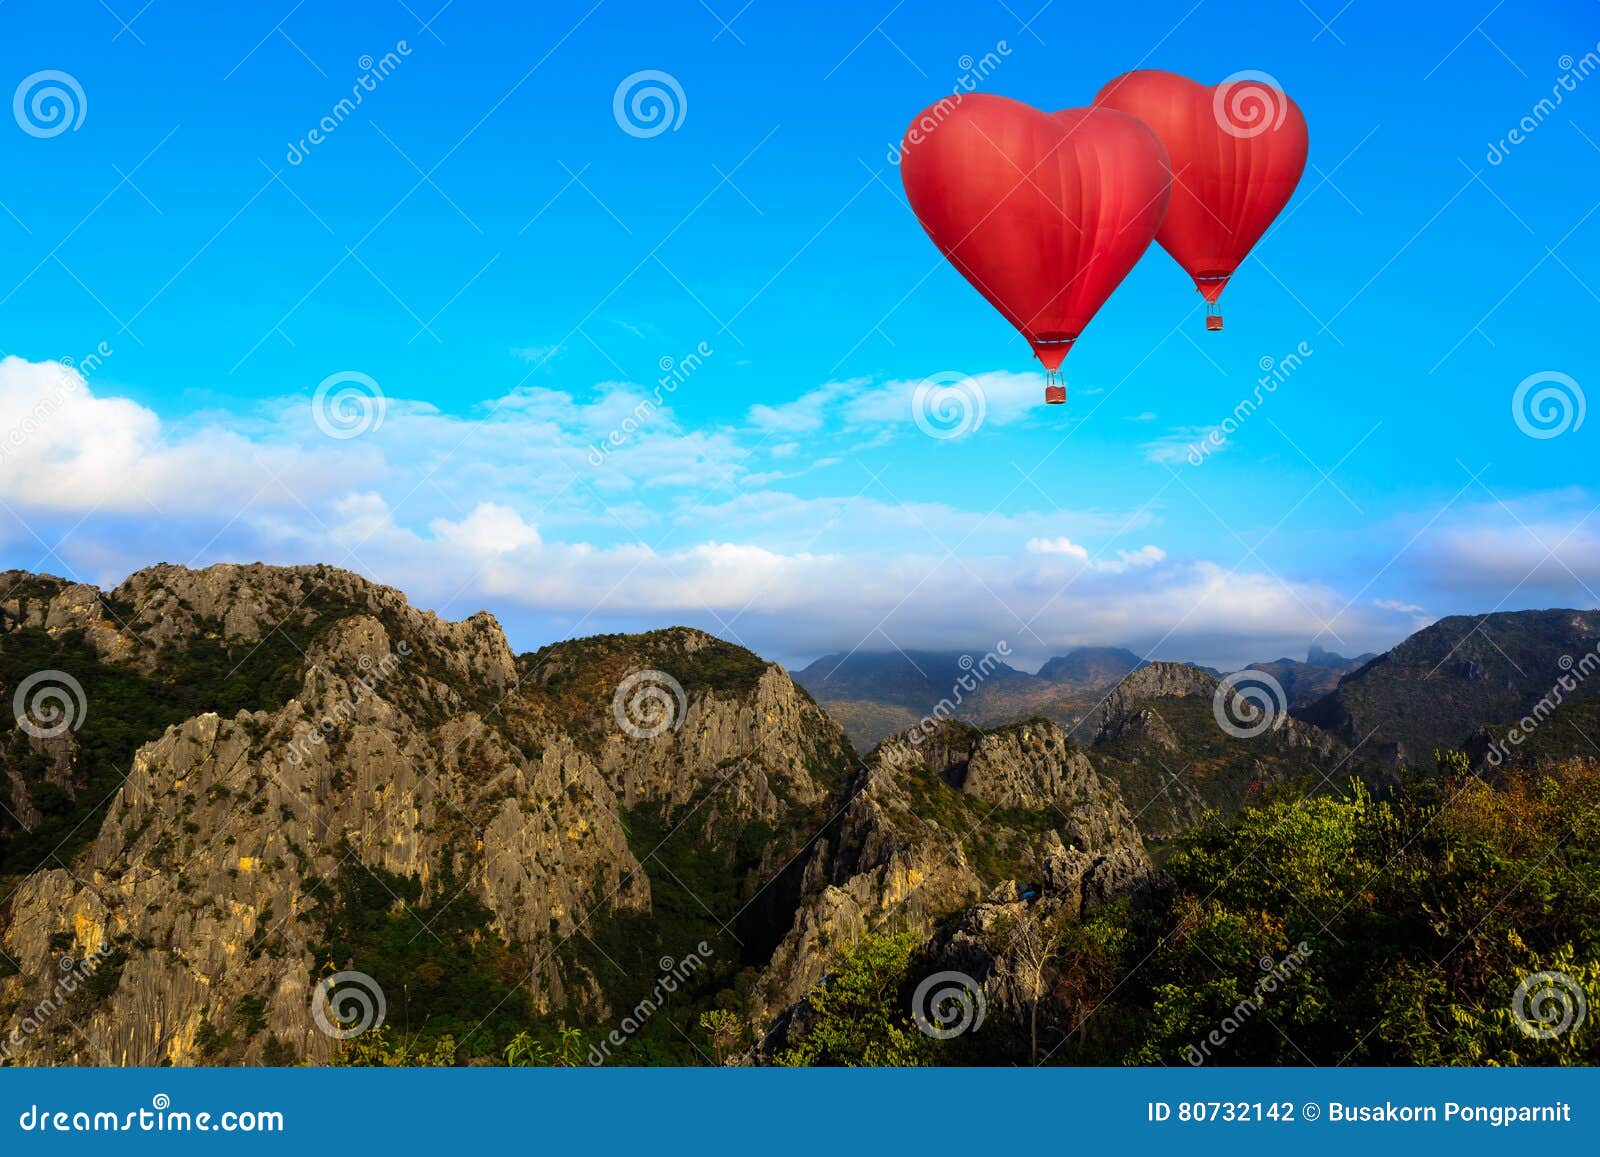 heart  ballooning flying over mountain